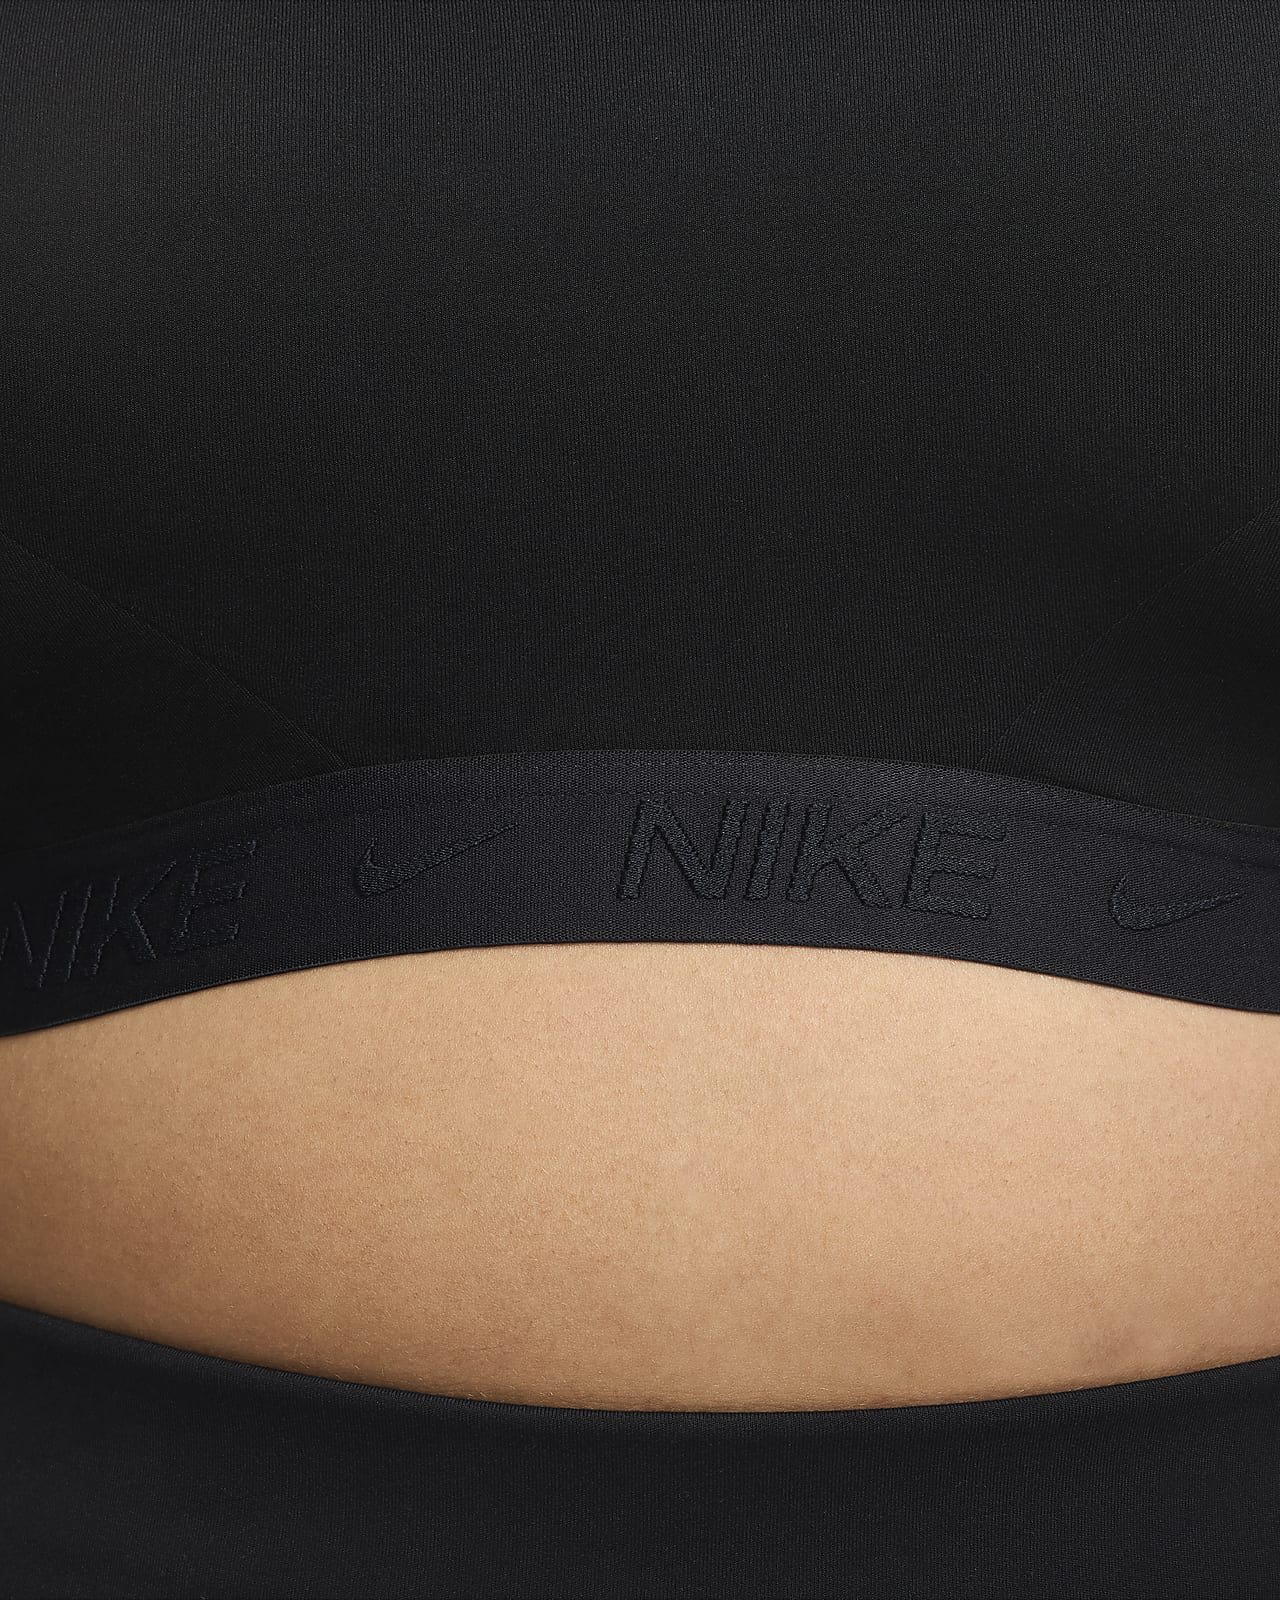 Nike Indy Women's Light-Support Padded Sports Bra (Plus Size). Nike IL